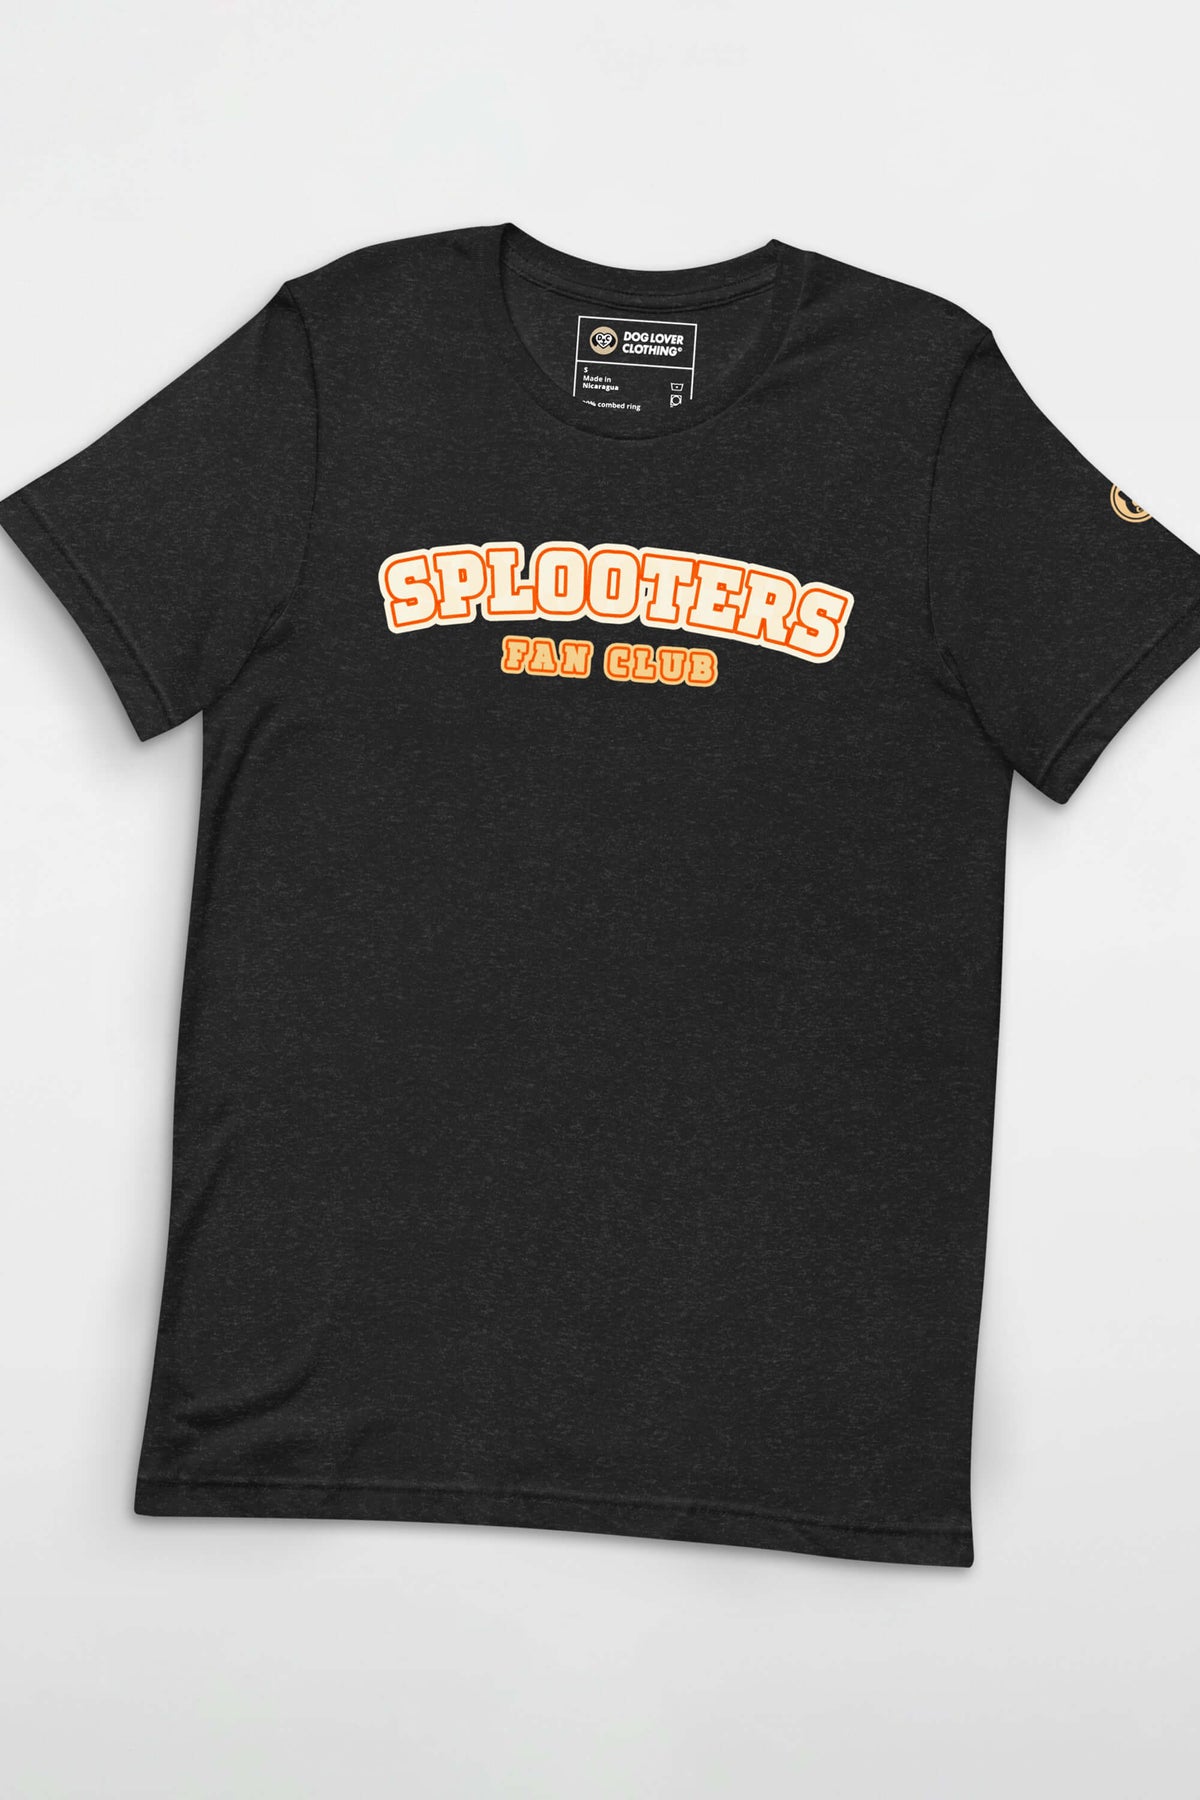 Official Splooting Corgi Fan Club T-Shirt